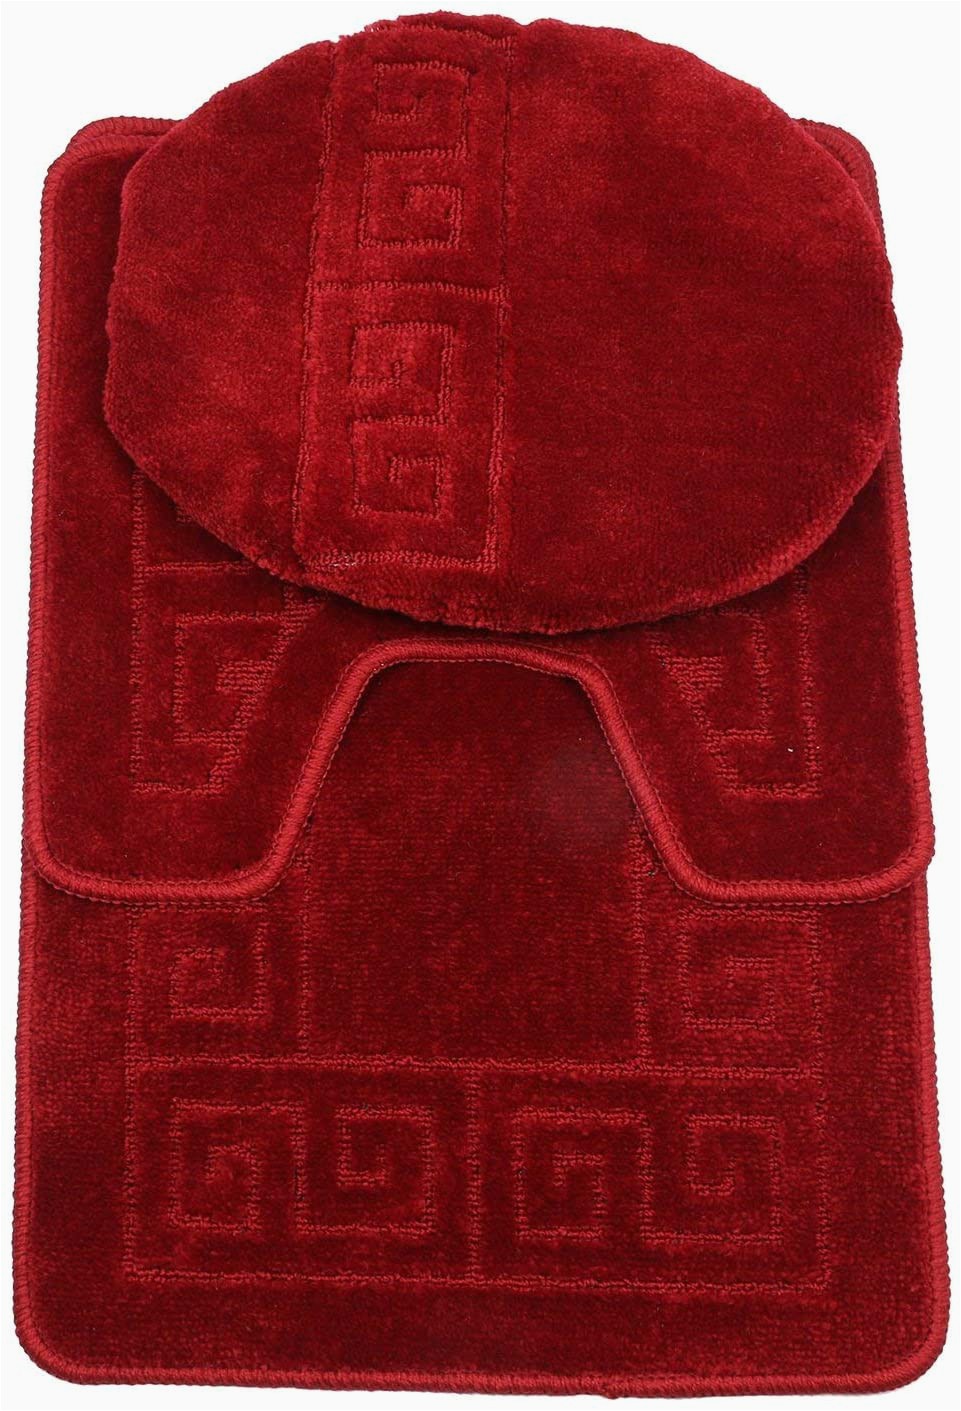 Deep Red Bathroom Rugs 3 Piece Bath Rug Set Pattern Bathroom Rug 20"x32" Contour Mat 20"x20" with Lid Cover Burgundy